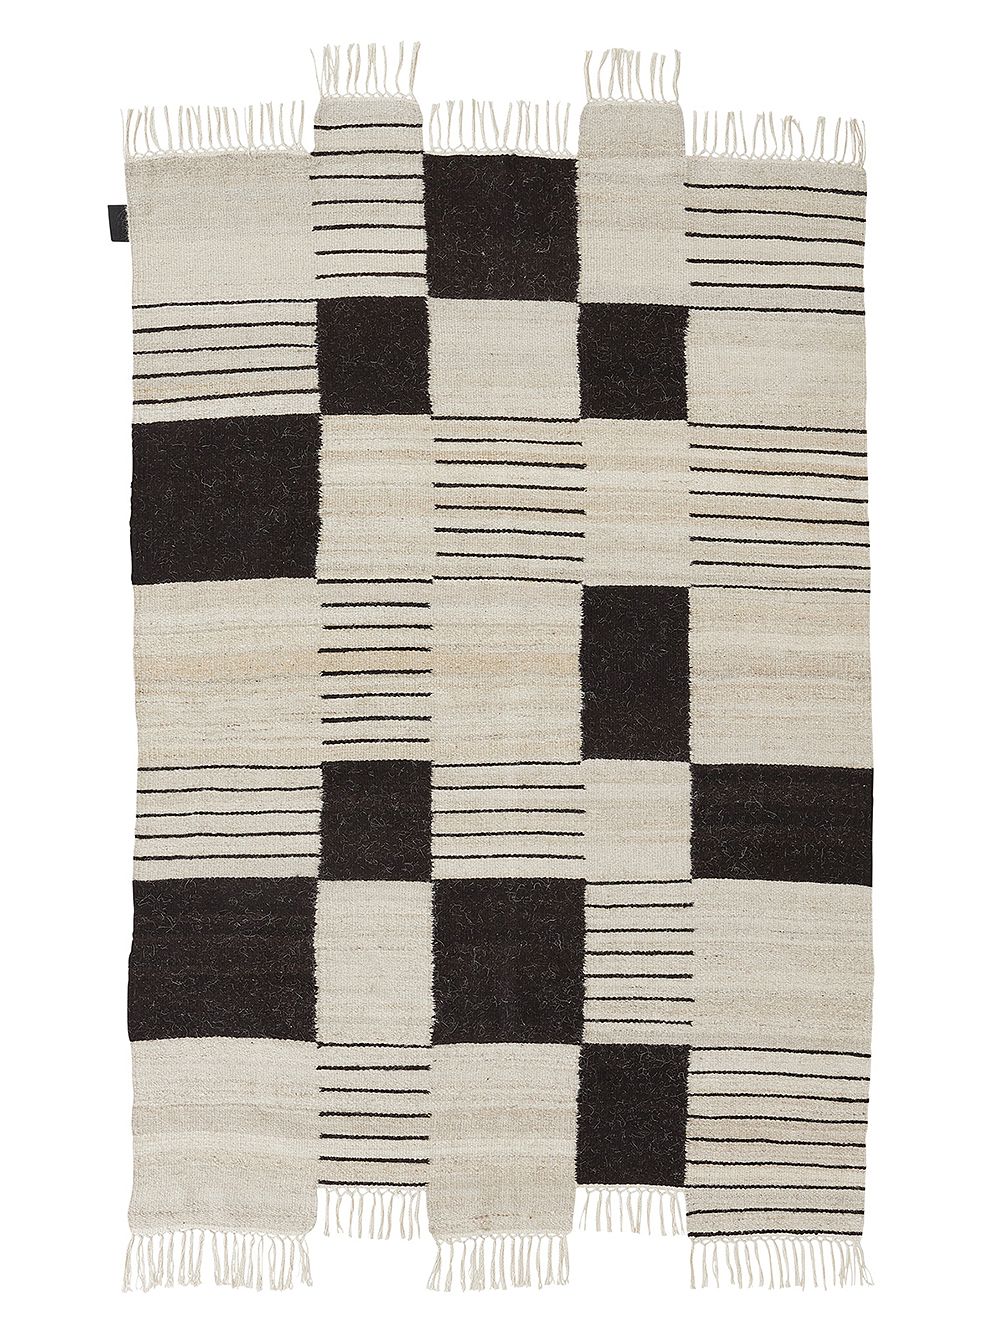 Sera Helsinki's Palsta rug in black and white.